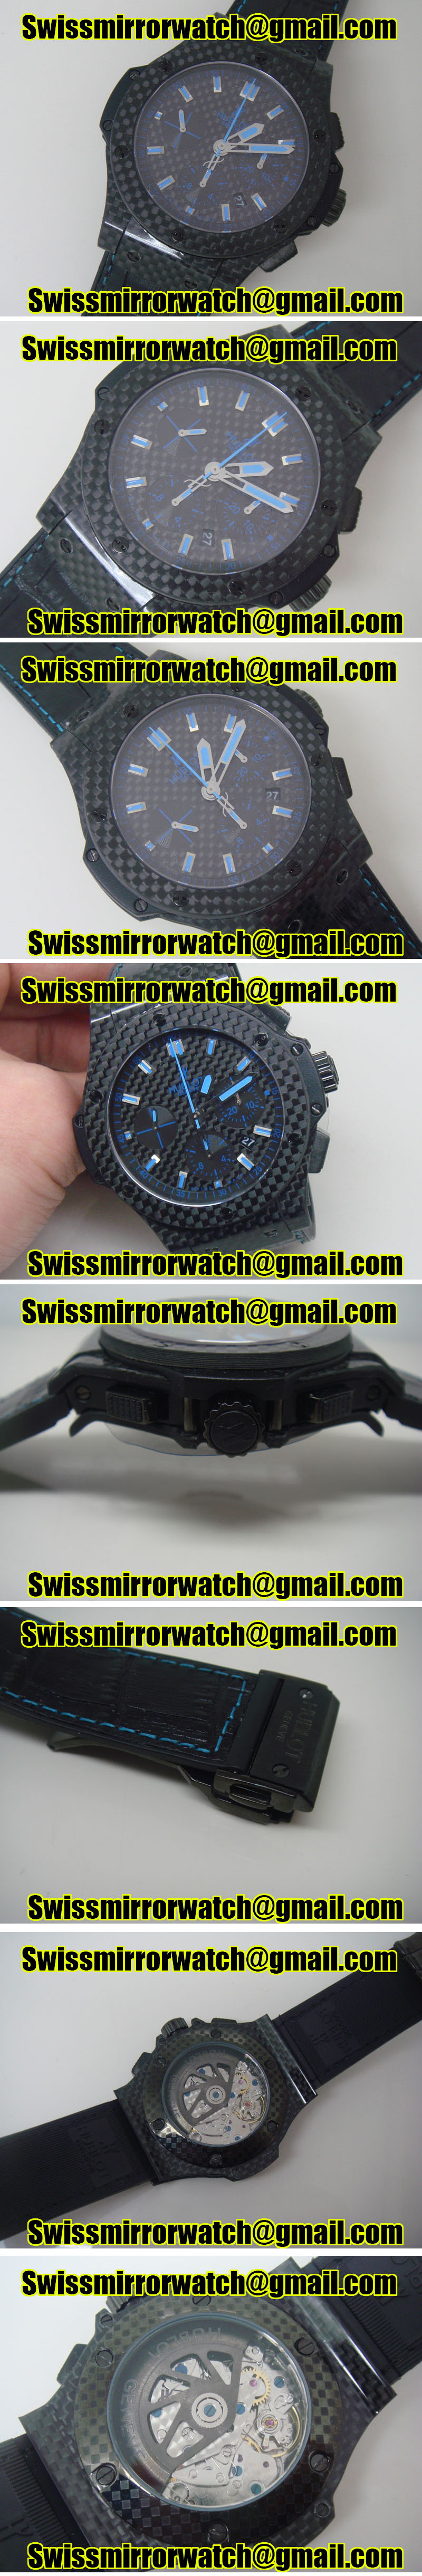 Hublot 301.QX.1740.GR All Carbon Blue Replica Watches